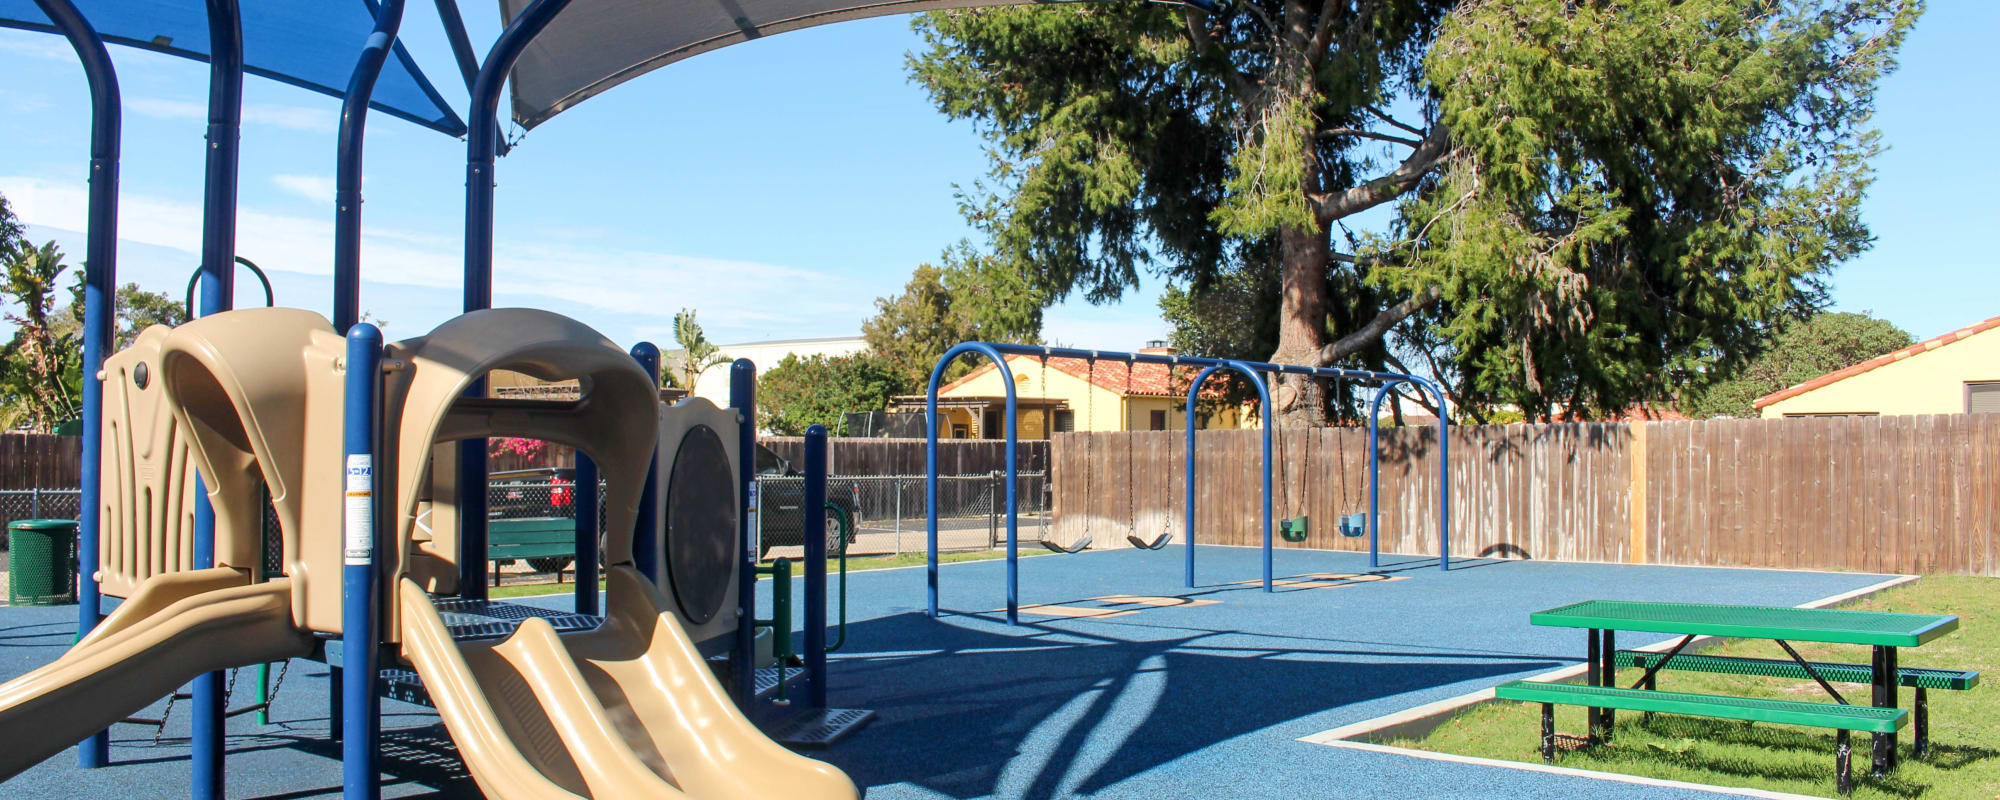 Playground at NAS North Island in San Diego, California